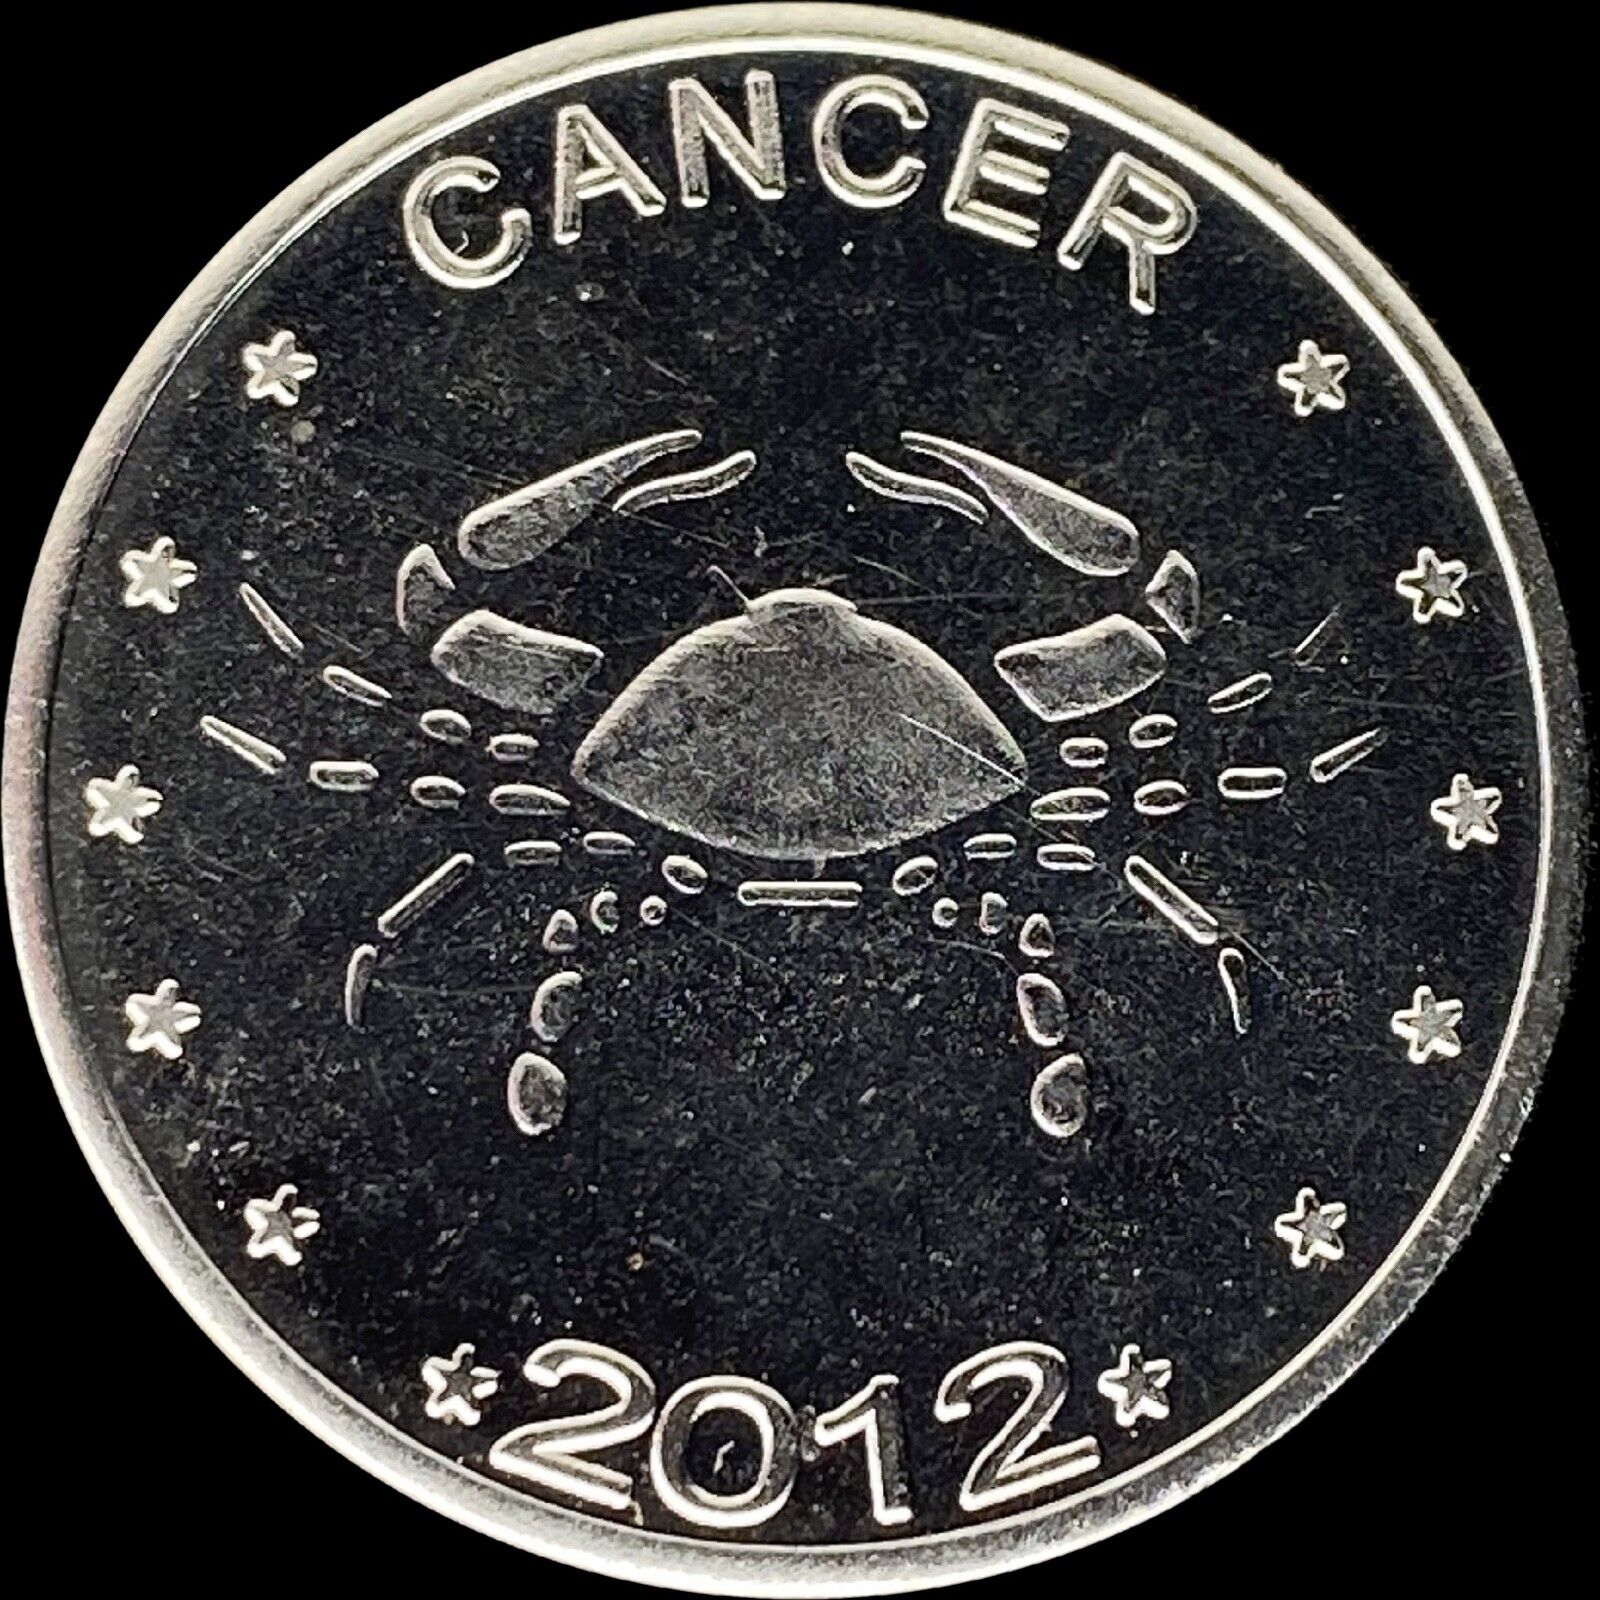 Somaliland. 2012, 10 Shillings - Zodiac, Astrology, Cancer